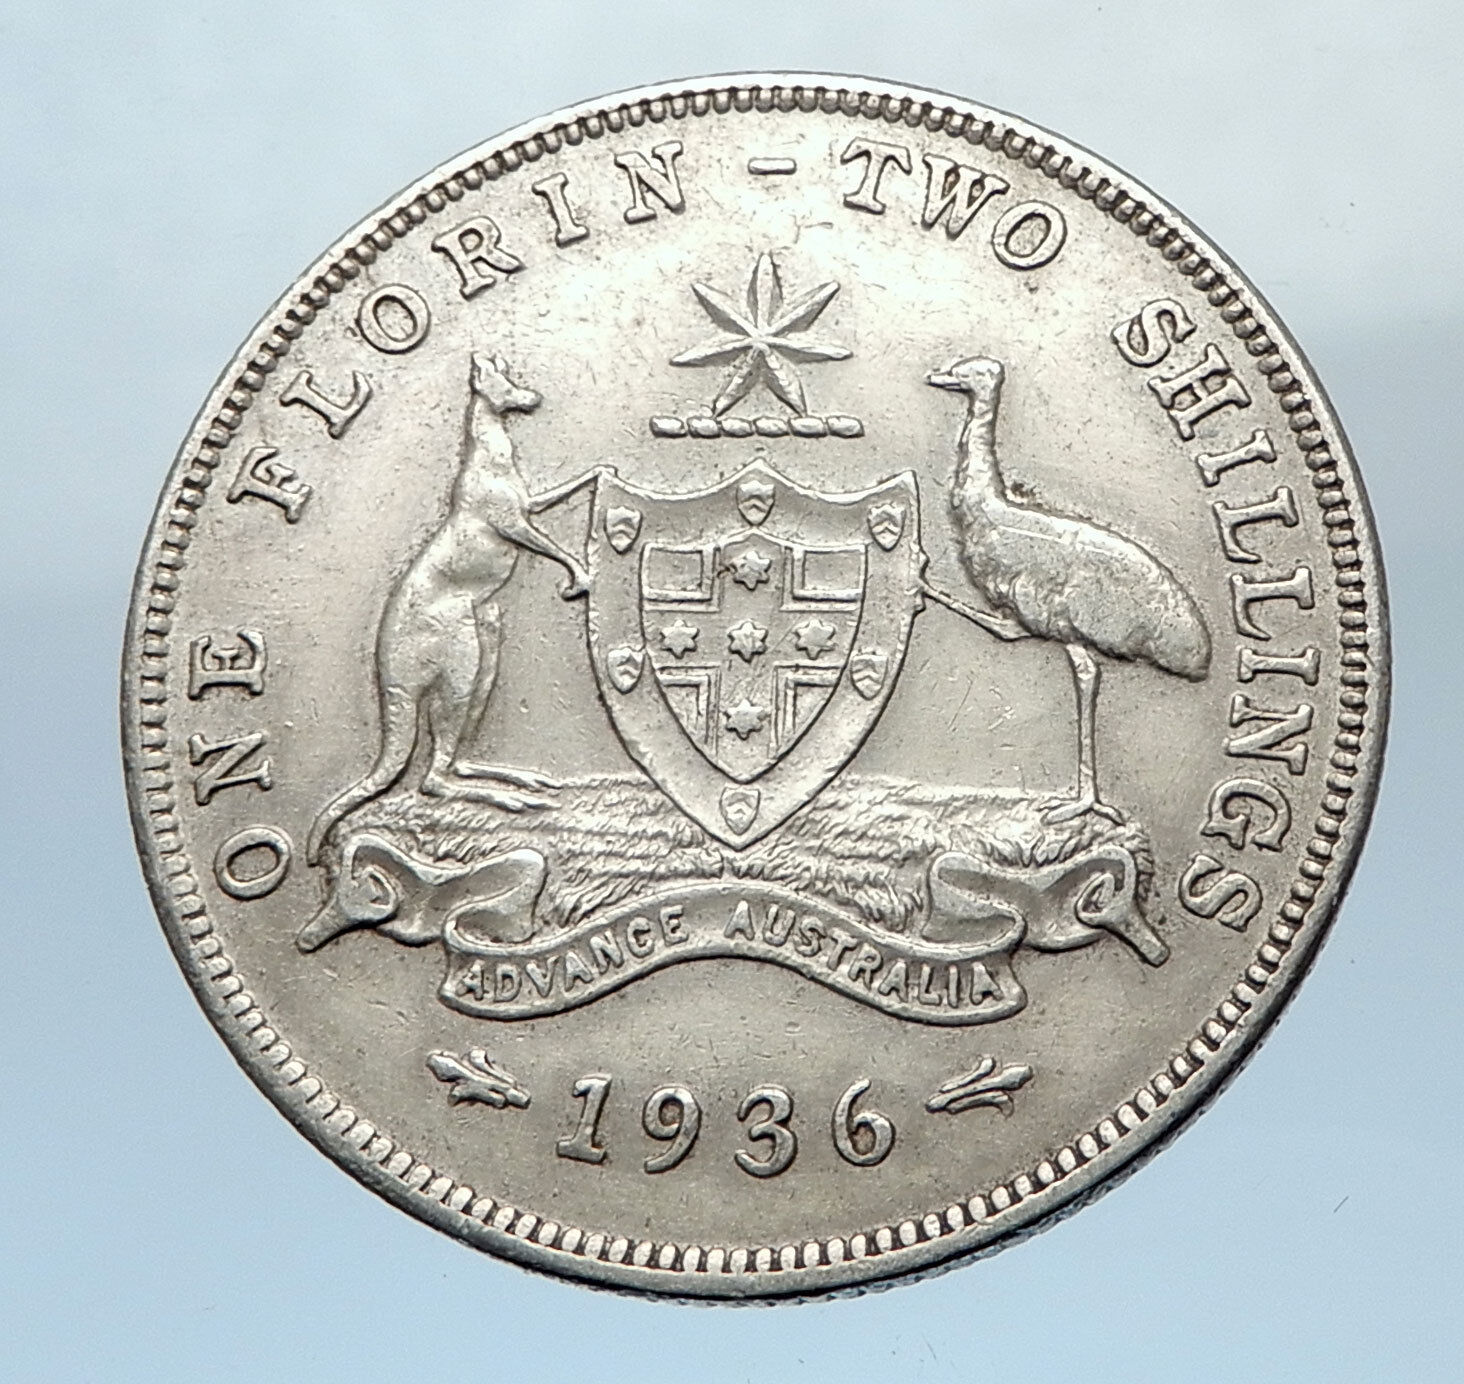 1936 AUSTRALIA UK King George V KANGAROO Antique Silver Shilling Coin i73773